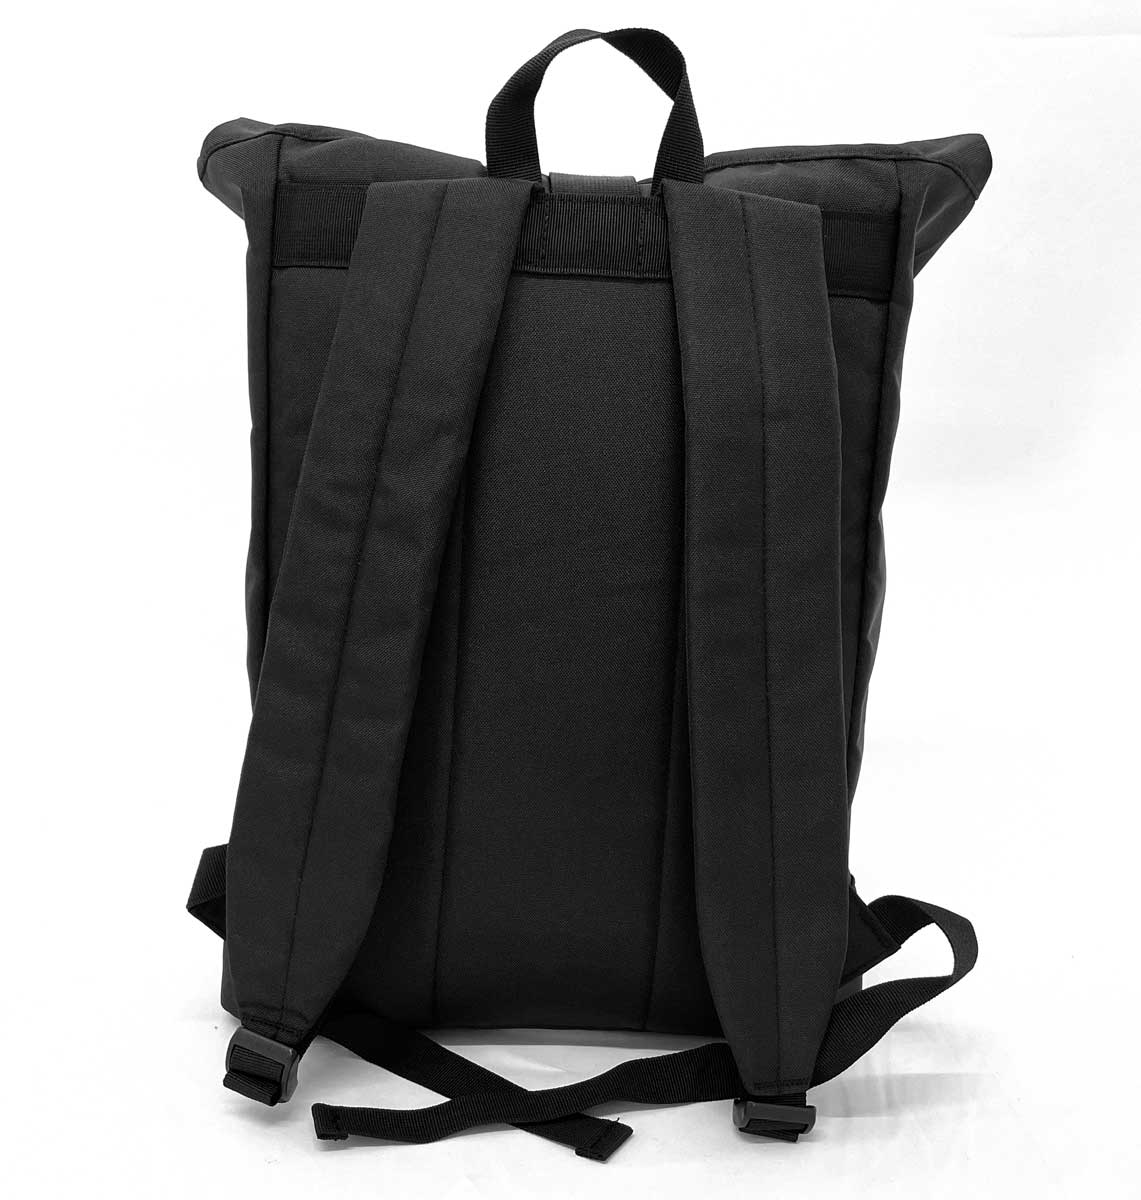 Bear Beach Roll-top Recycled Backpack - Blue Panda